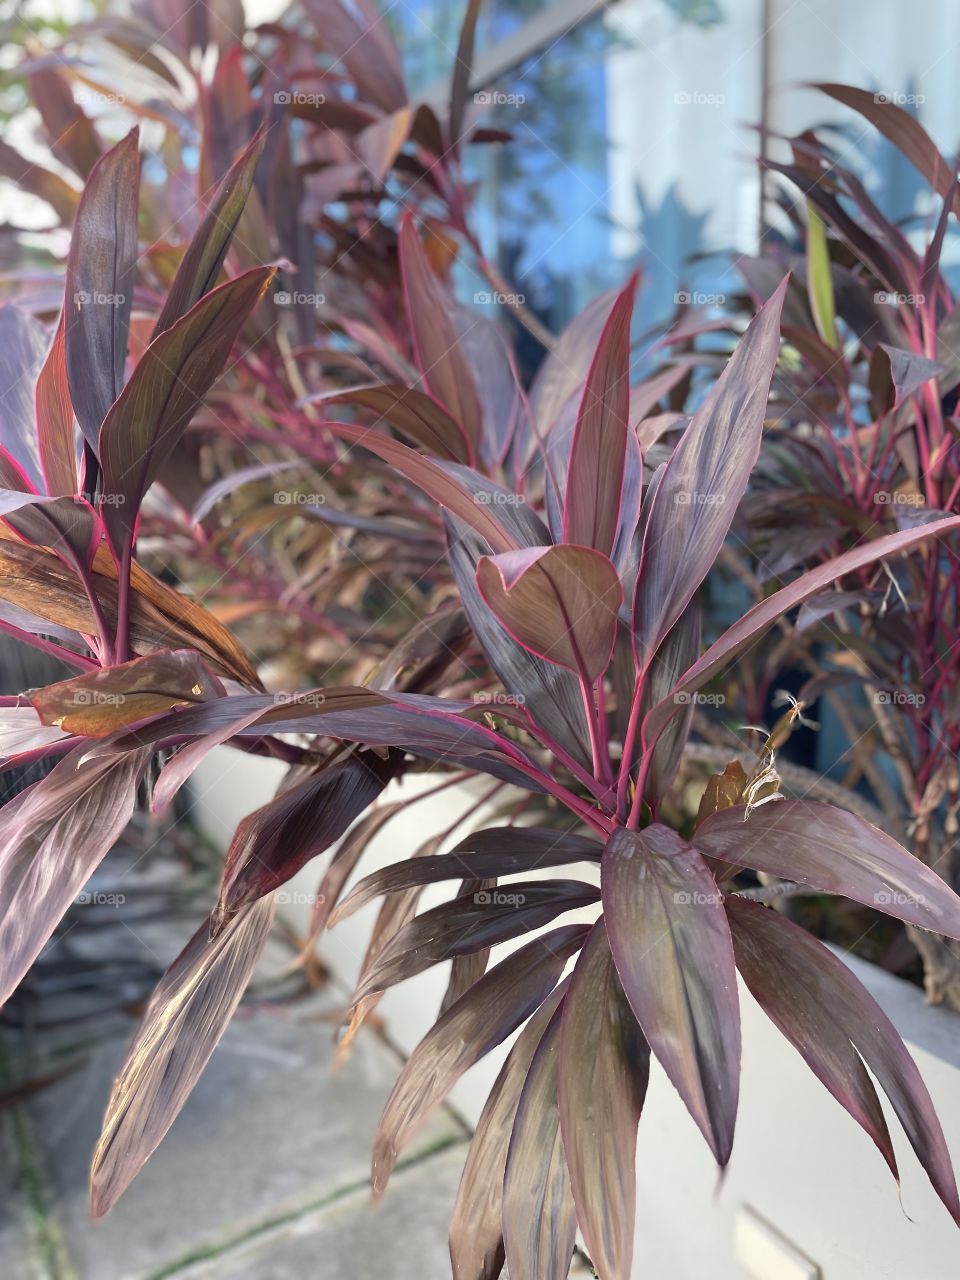 Plant with purplish linings